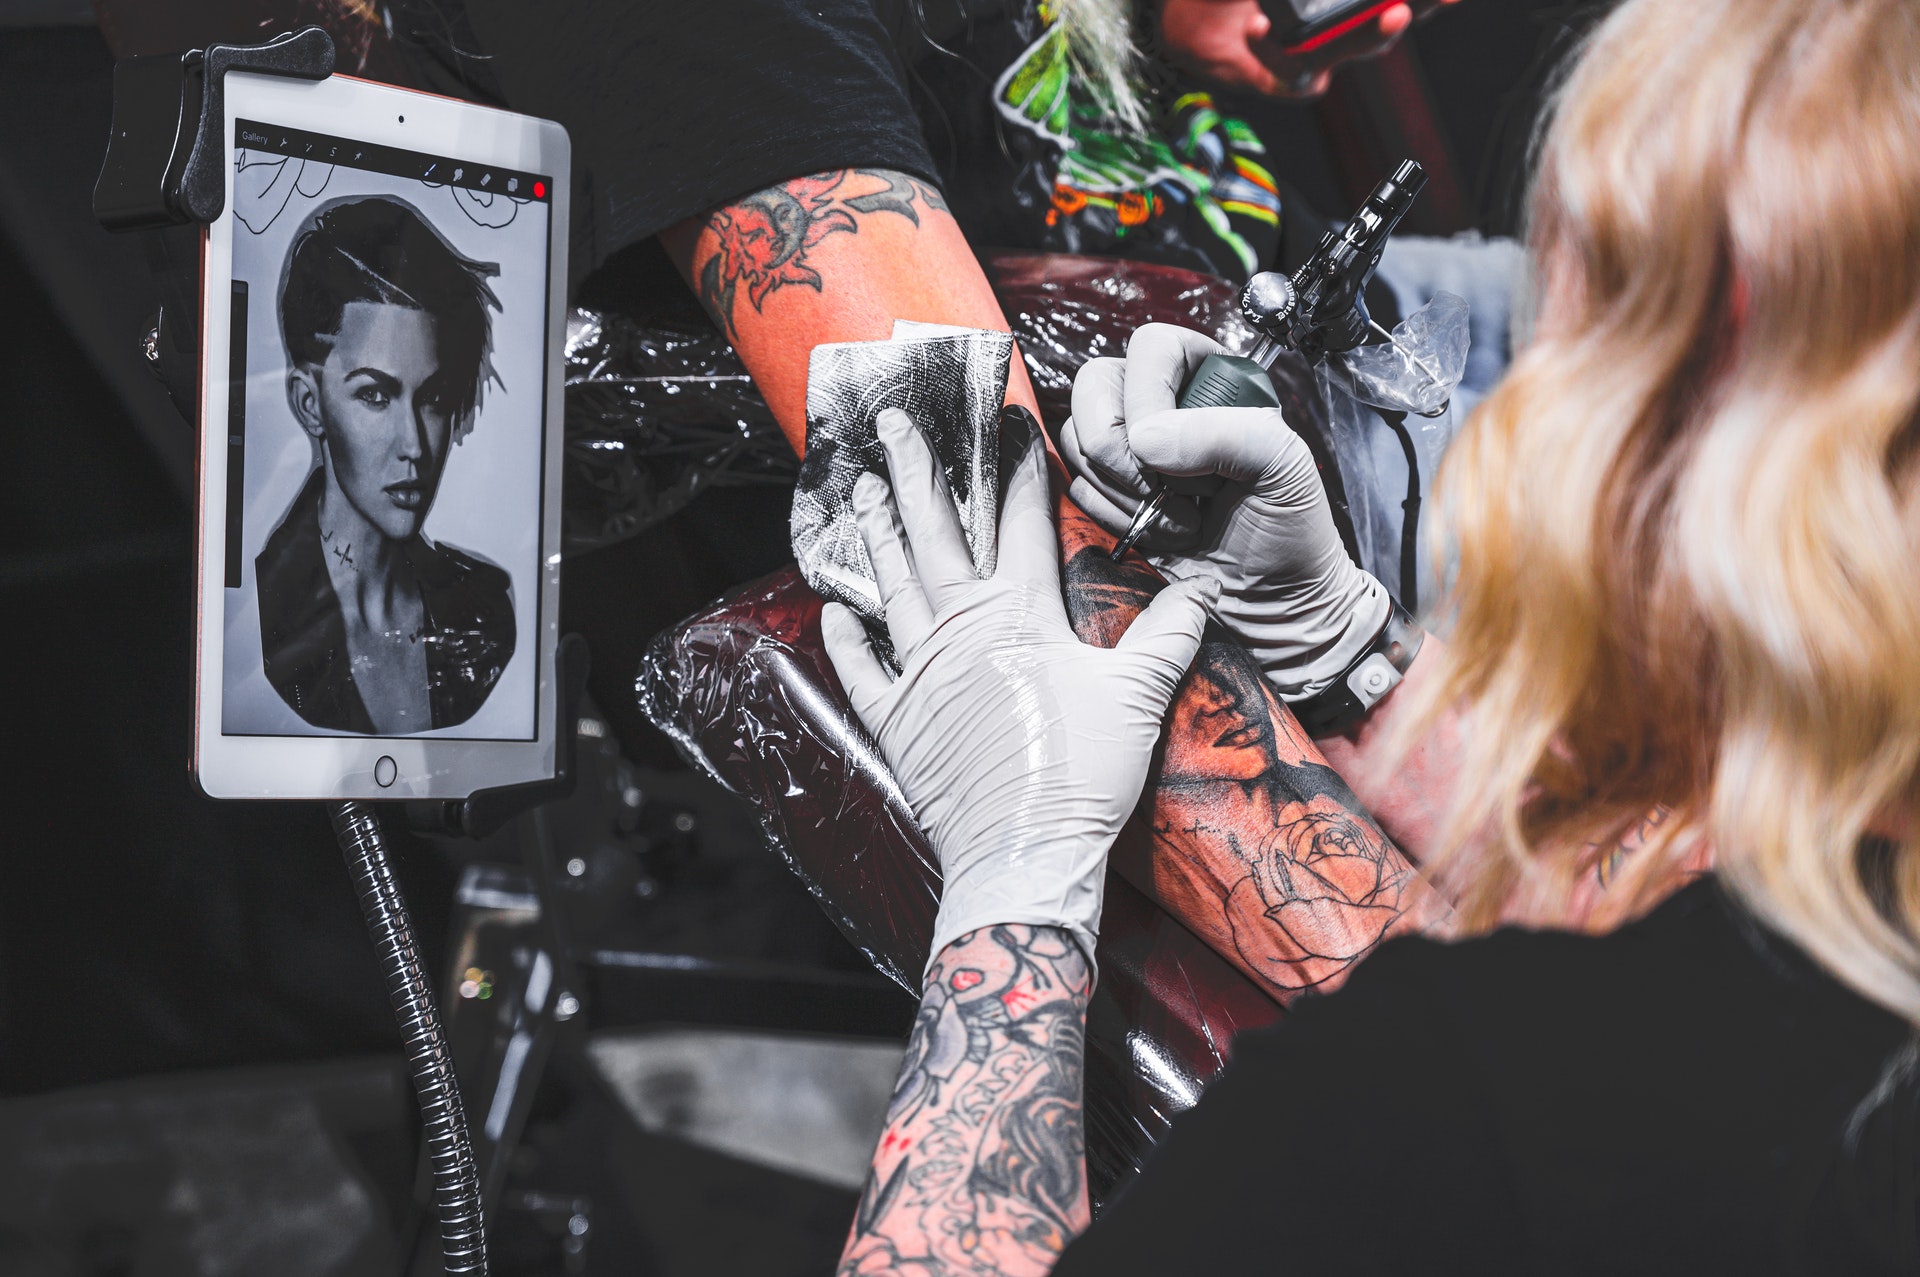 Toronto Tattoo Artists Are Suffering Through Longest Closures - Narcity